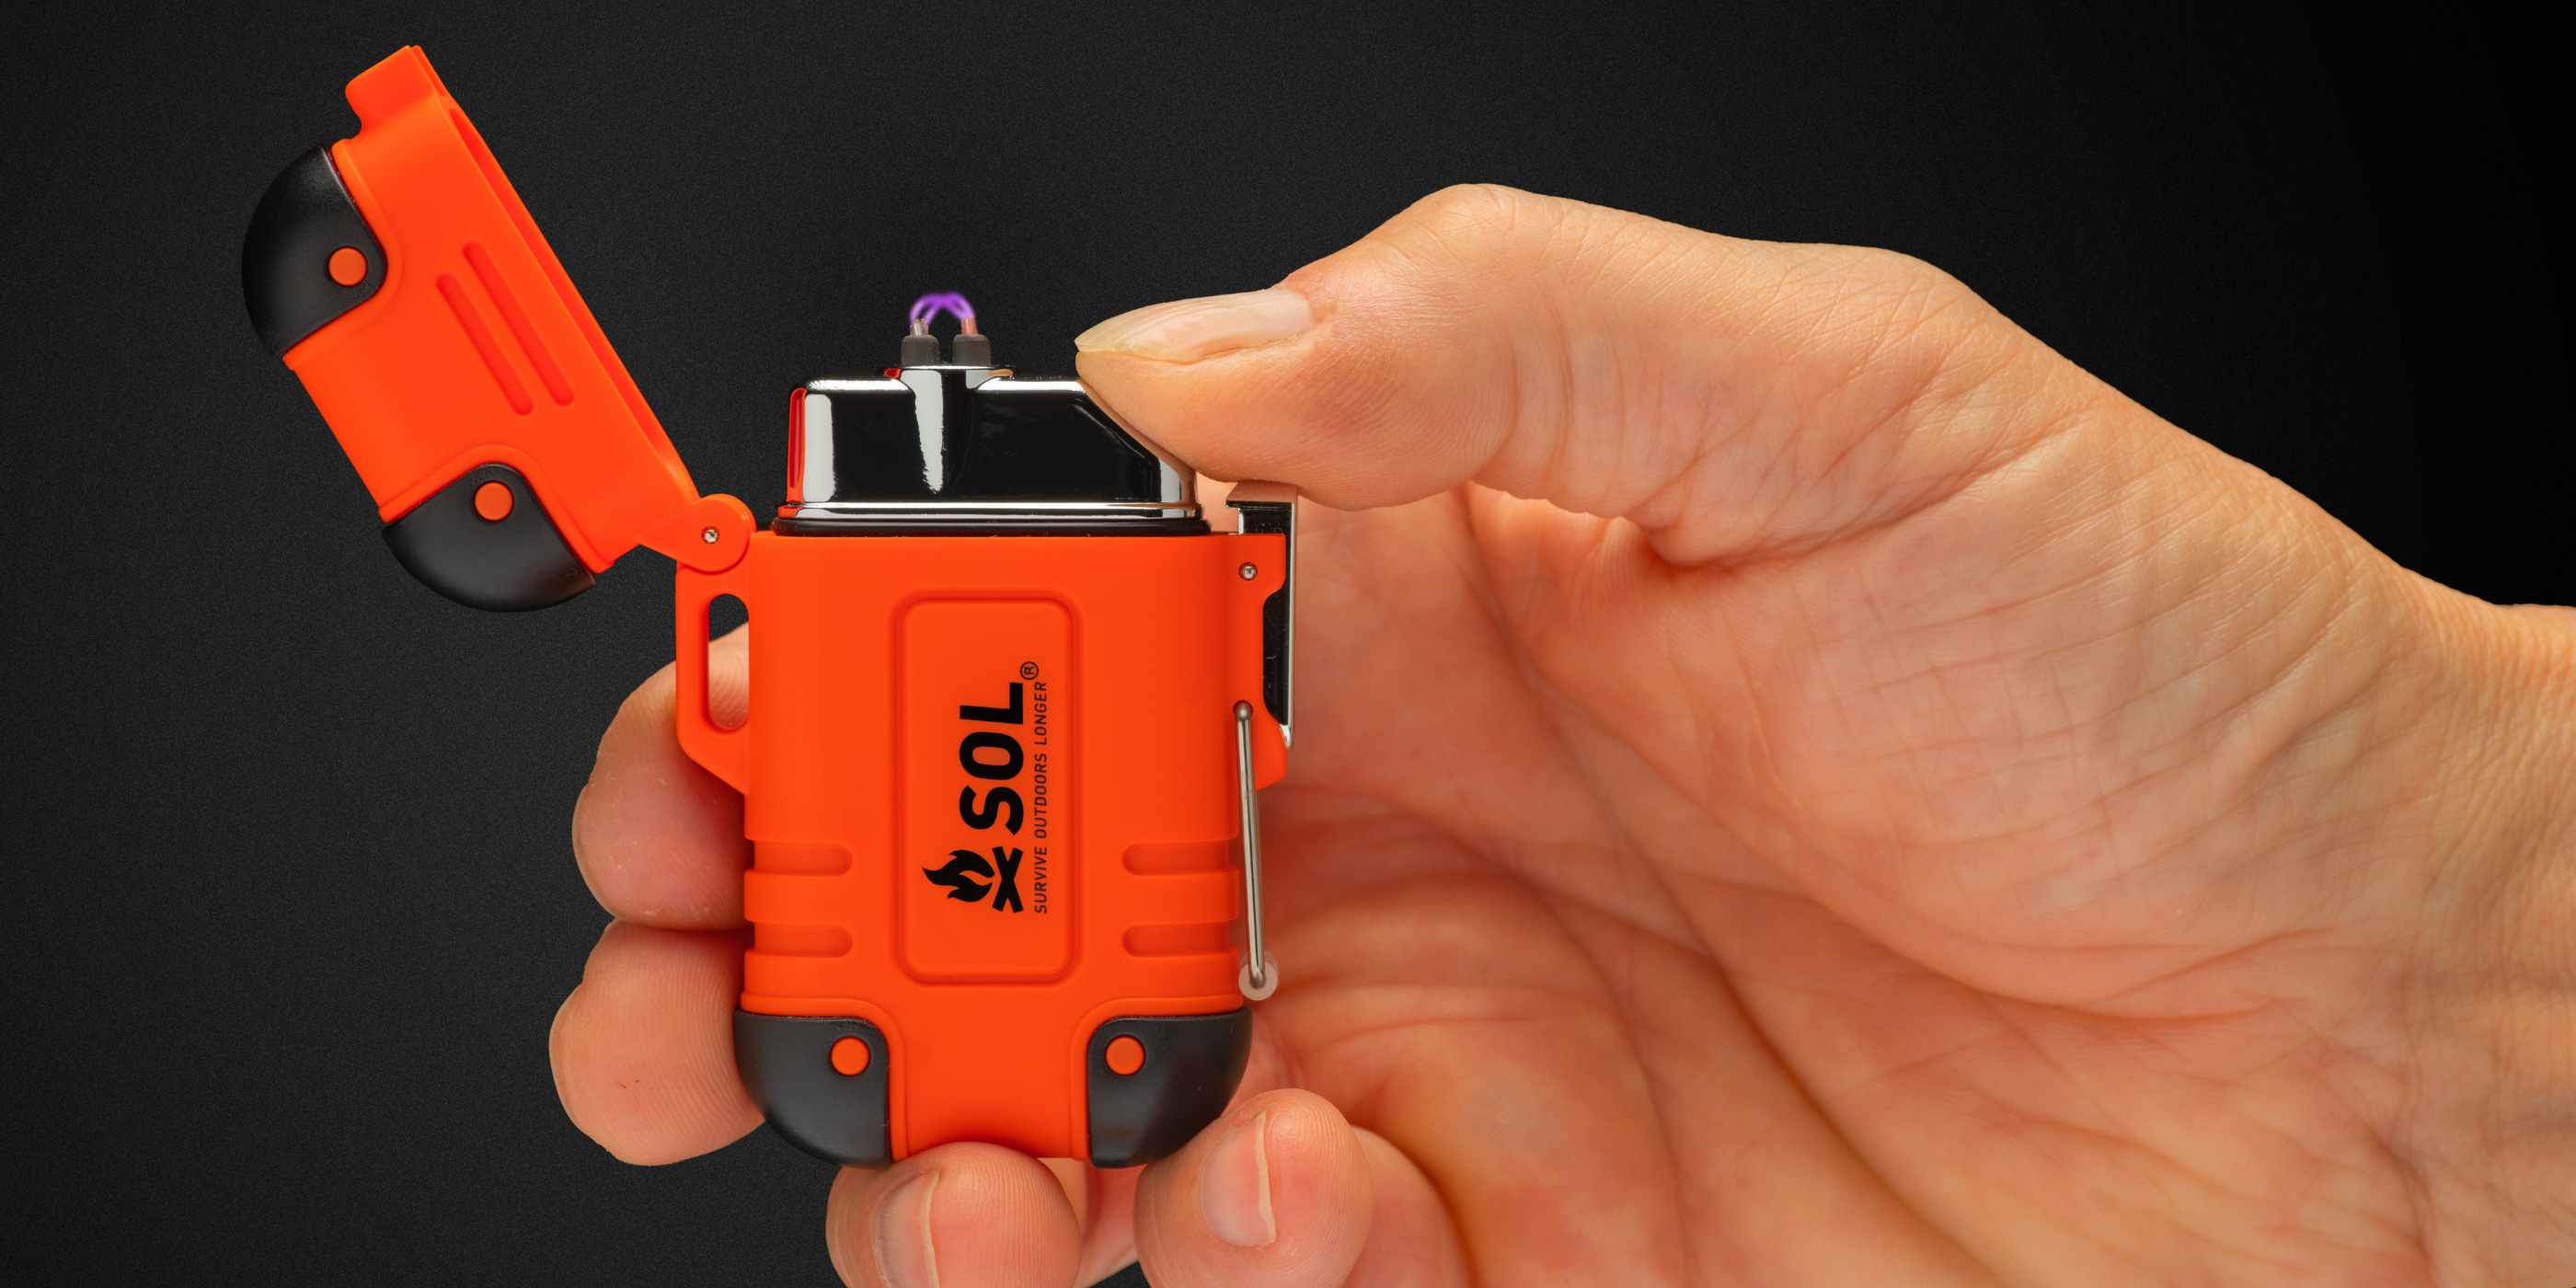 Orange and Black SOL Plasma Dual Arc Lighter in Hand Lit Against Black Background